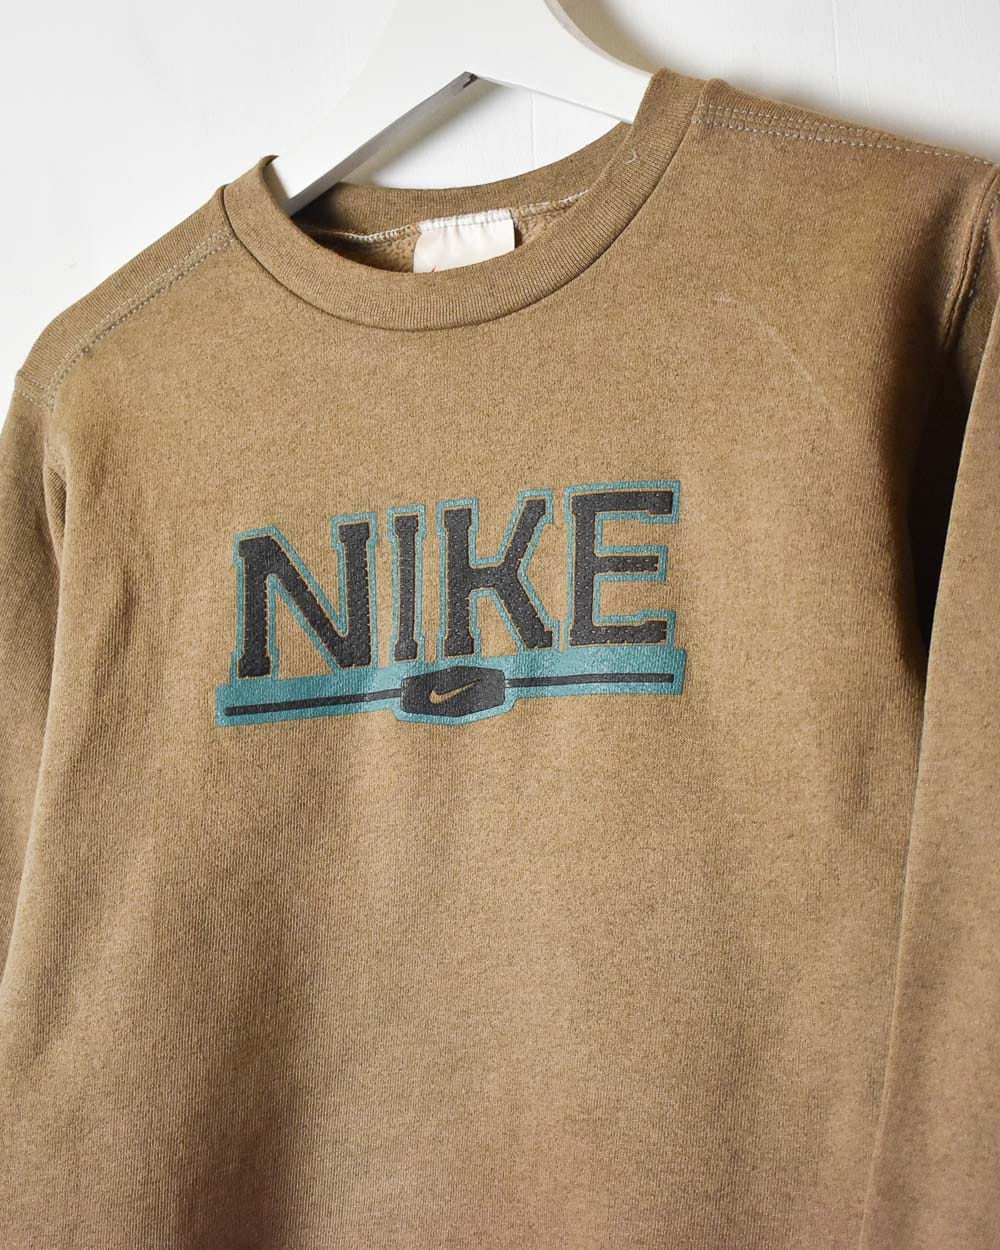 Brown Nike Sweatshirt - X-Small